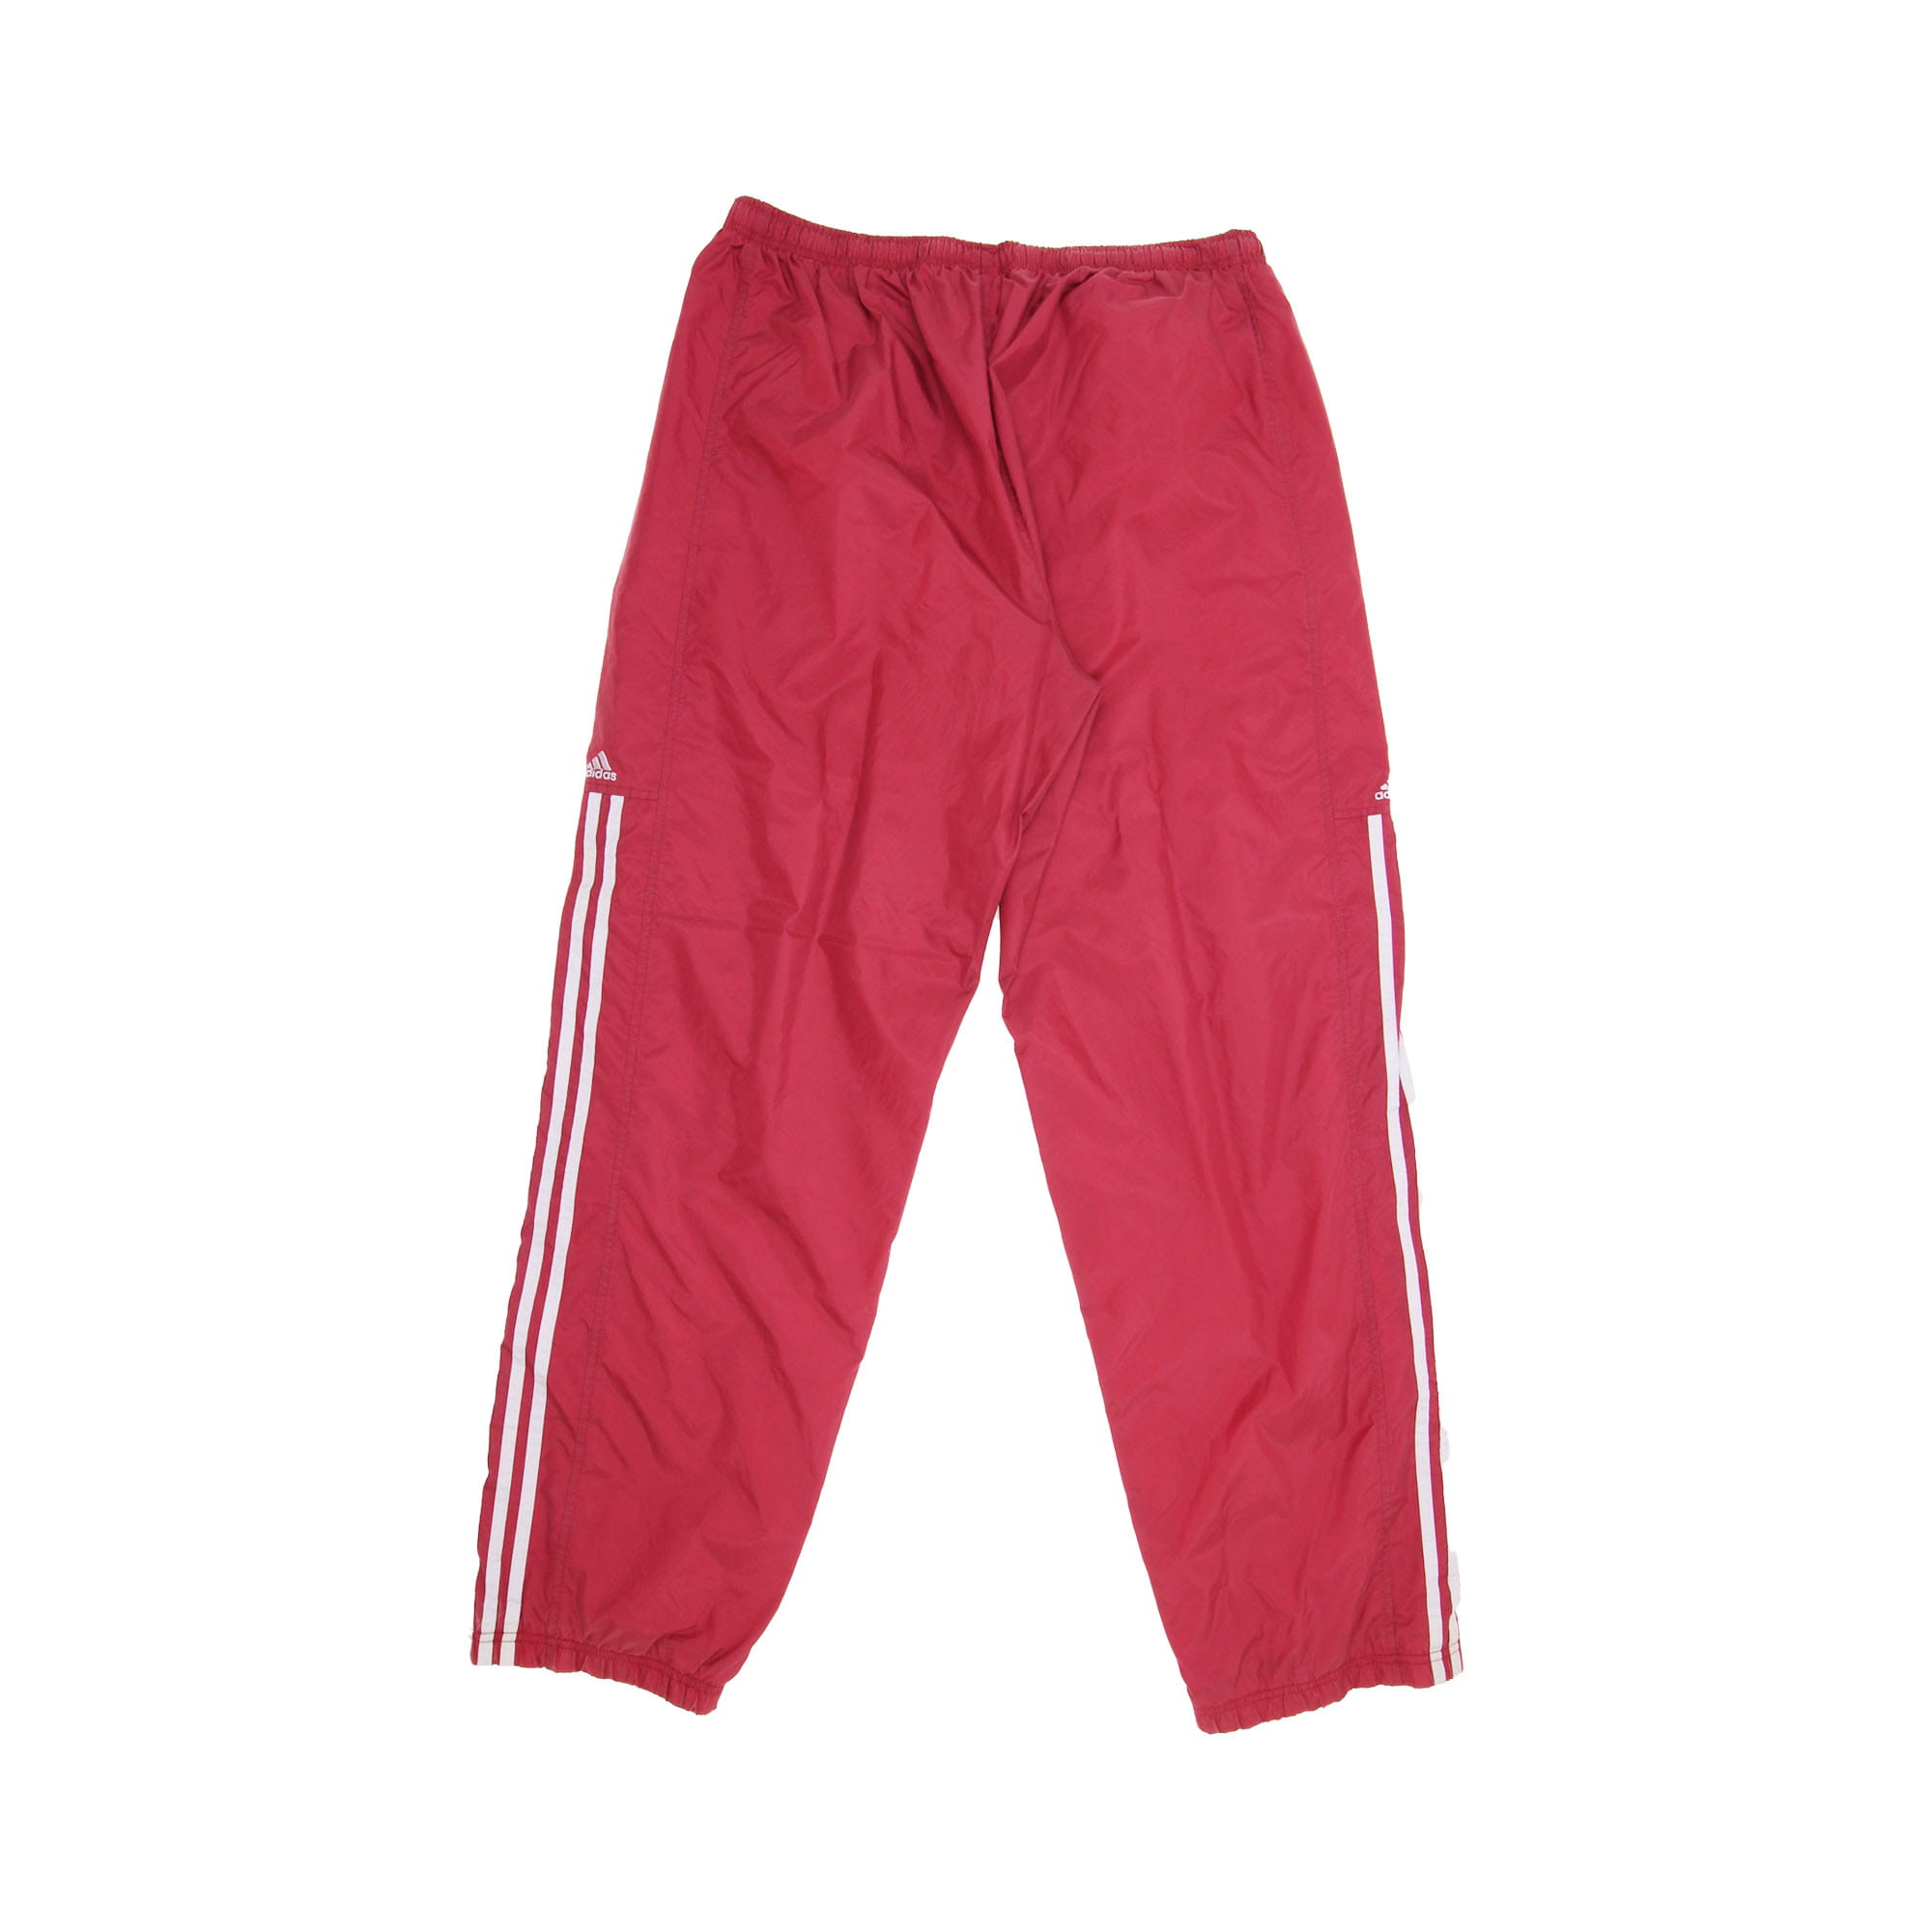 Adidas Track Pants Bordeaux -  L/XL